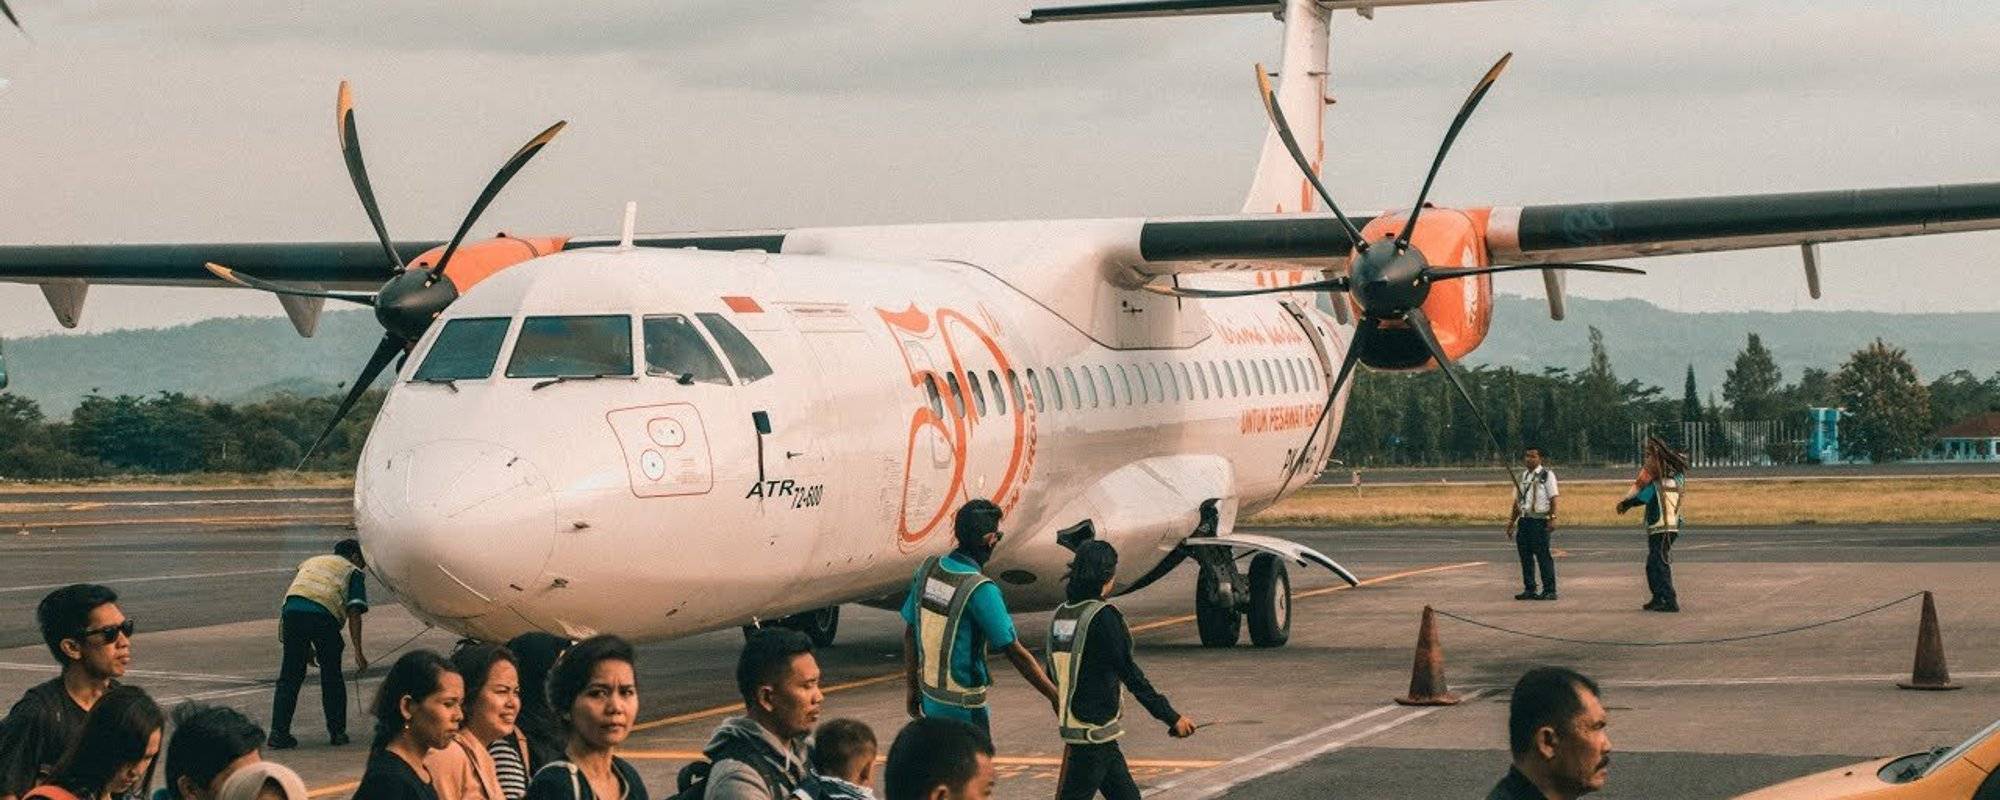 How was the journey from Yogyakarta Airport to Bukit Lawang?